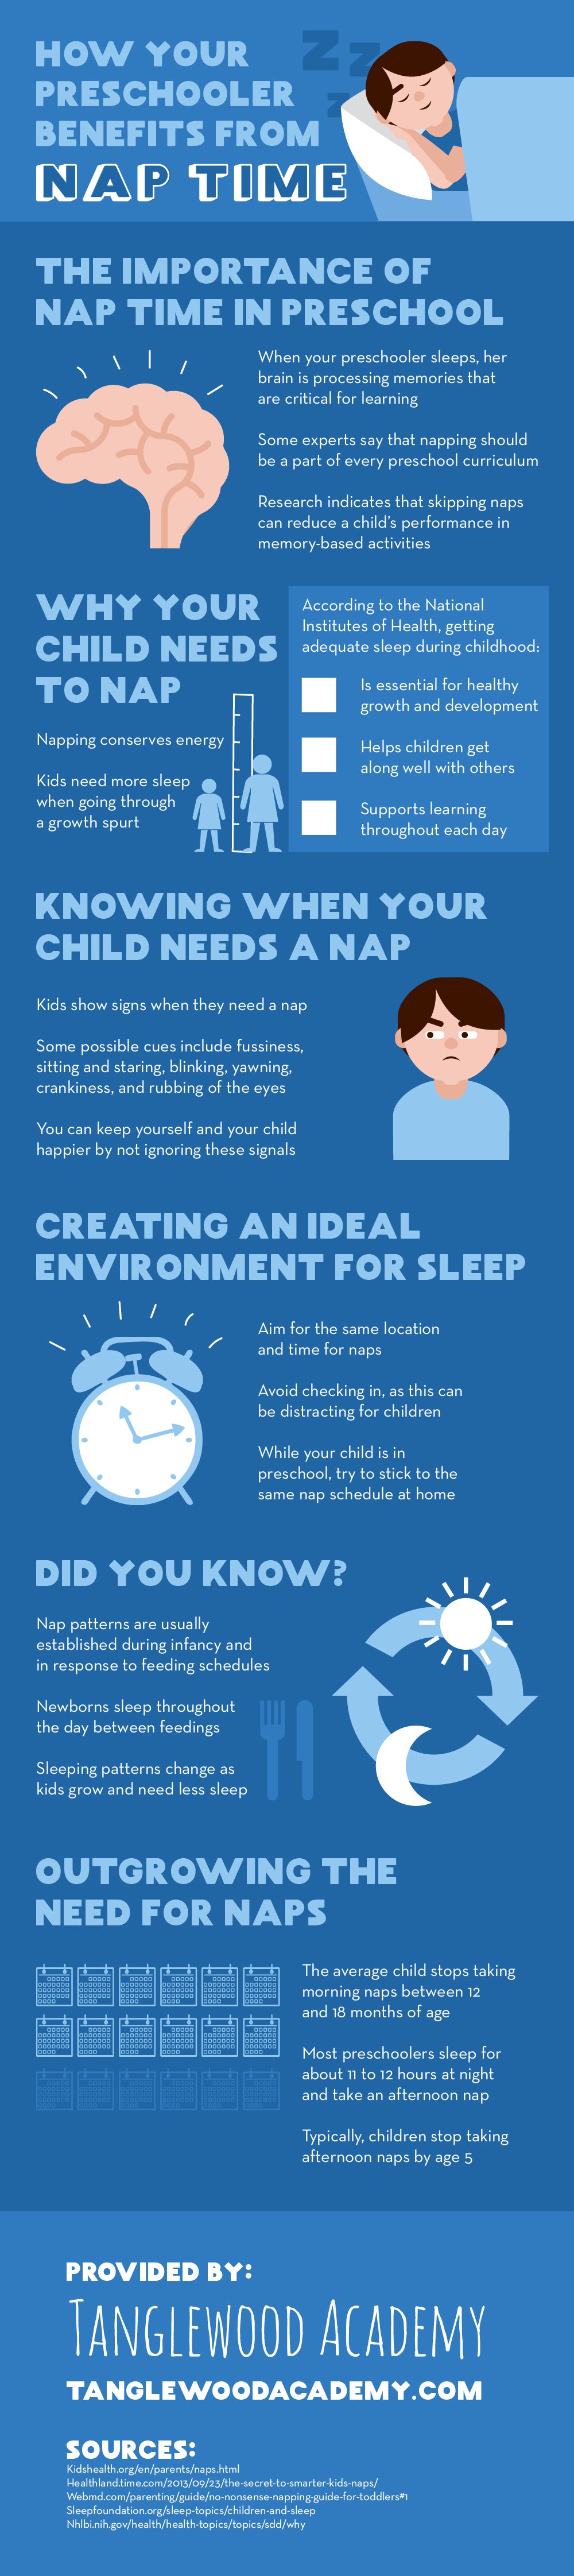 Preschooler Benefits from Nap Time Infographic